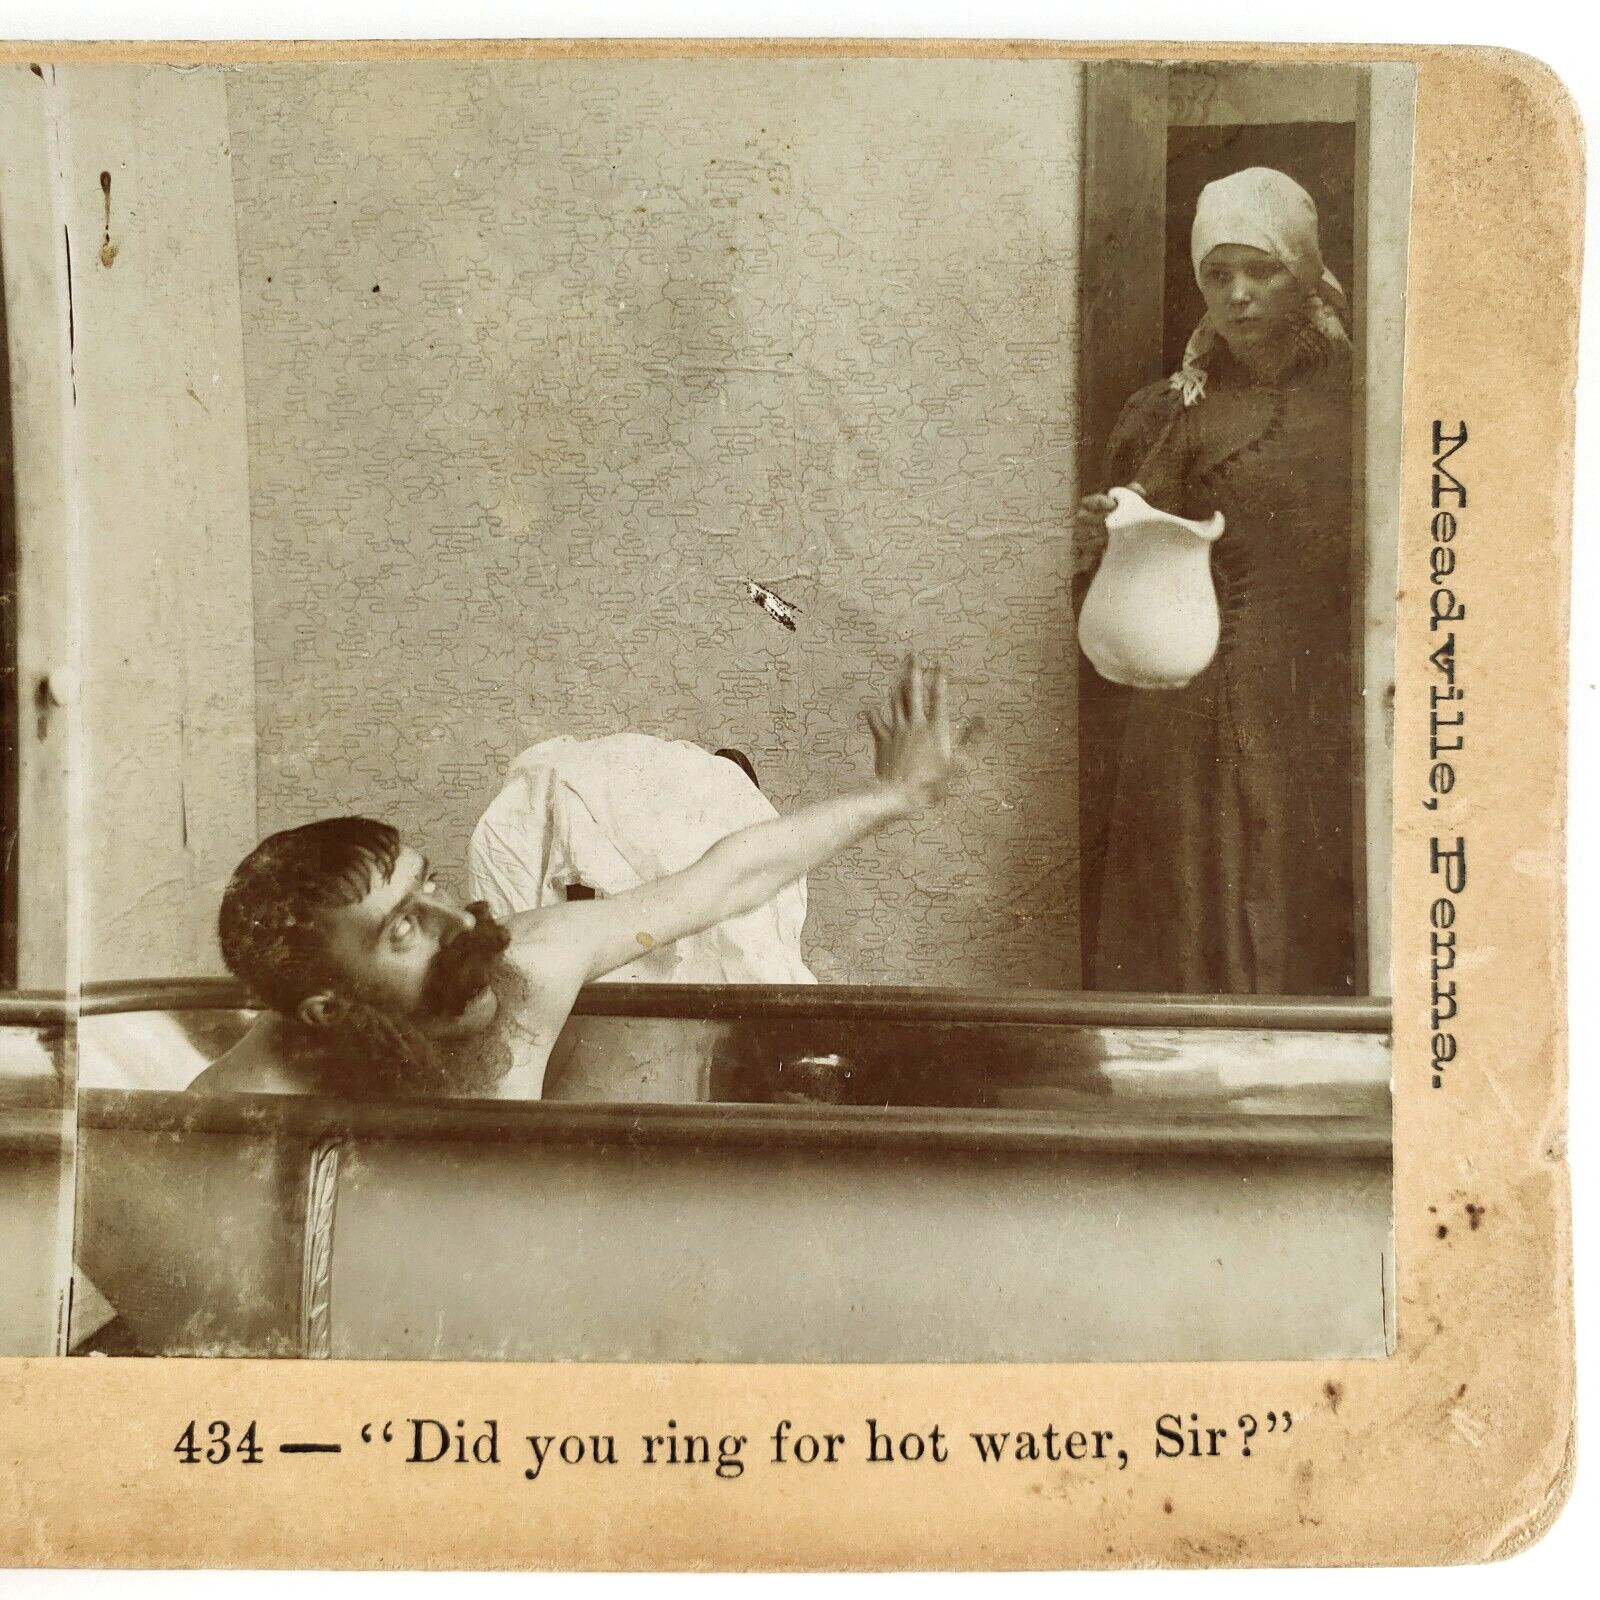 Maid Surprising Bathing Man Stereoview c1895 Risque Victorian Clawfoot Tub A2530